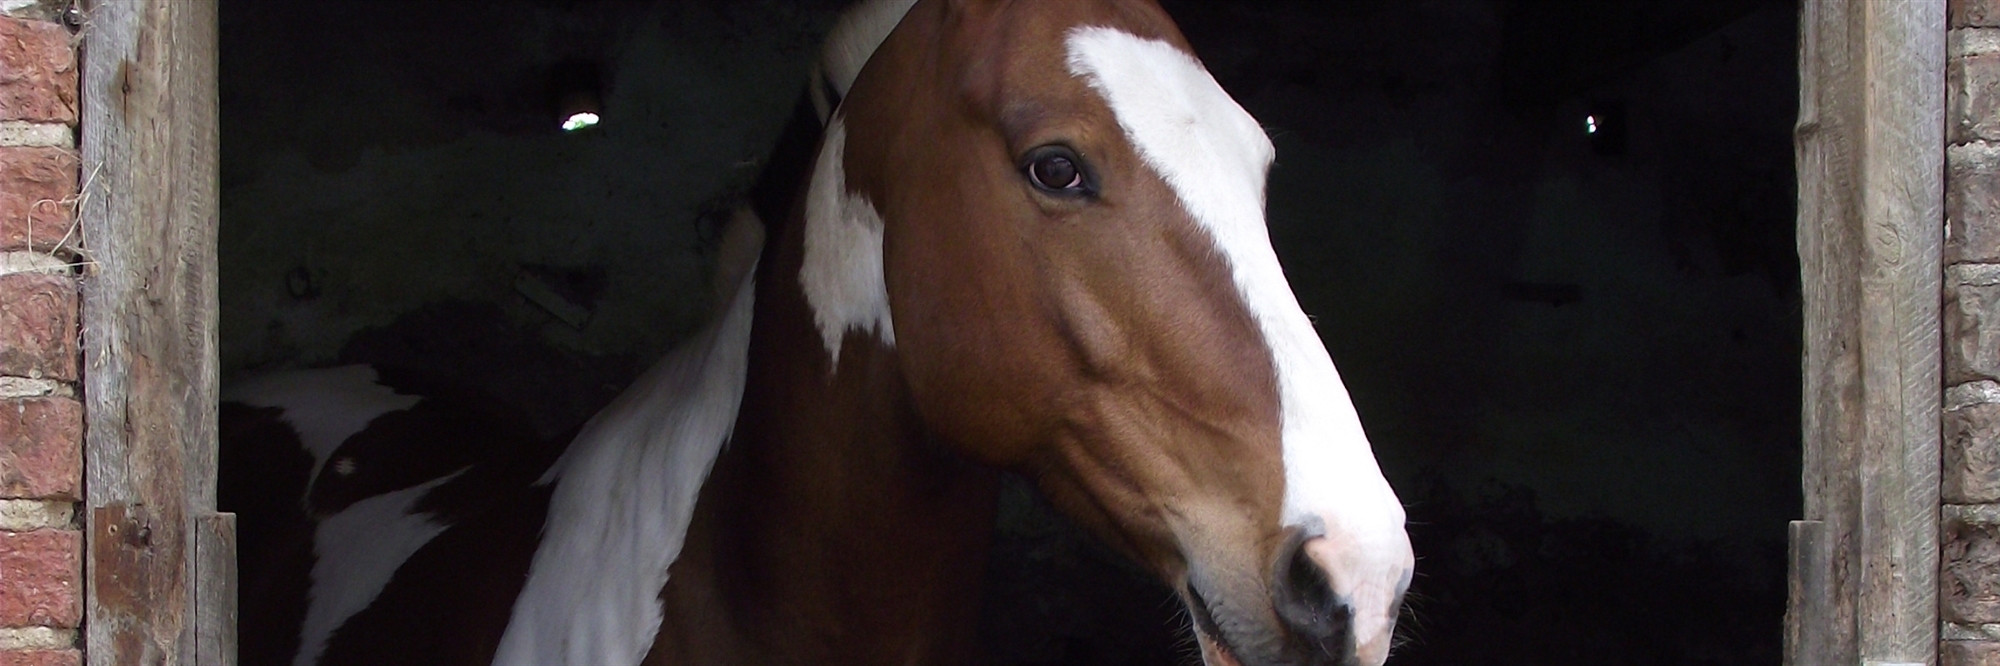 Chestnut horse head photo